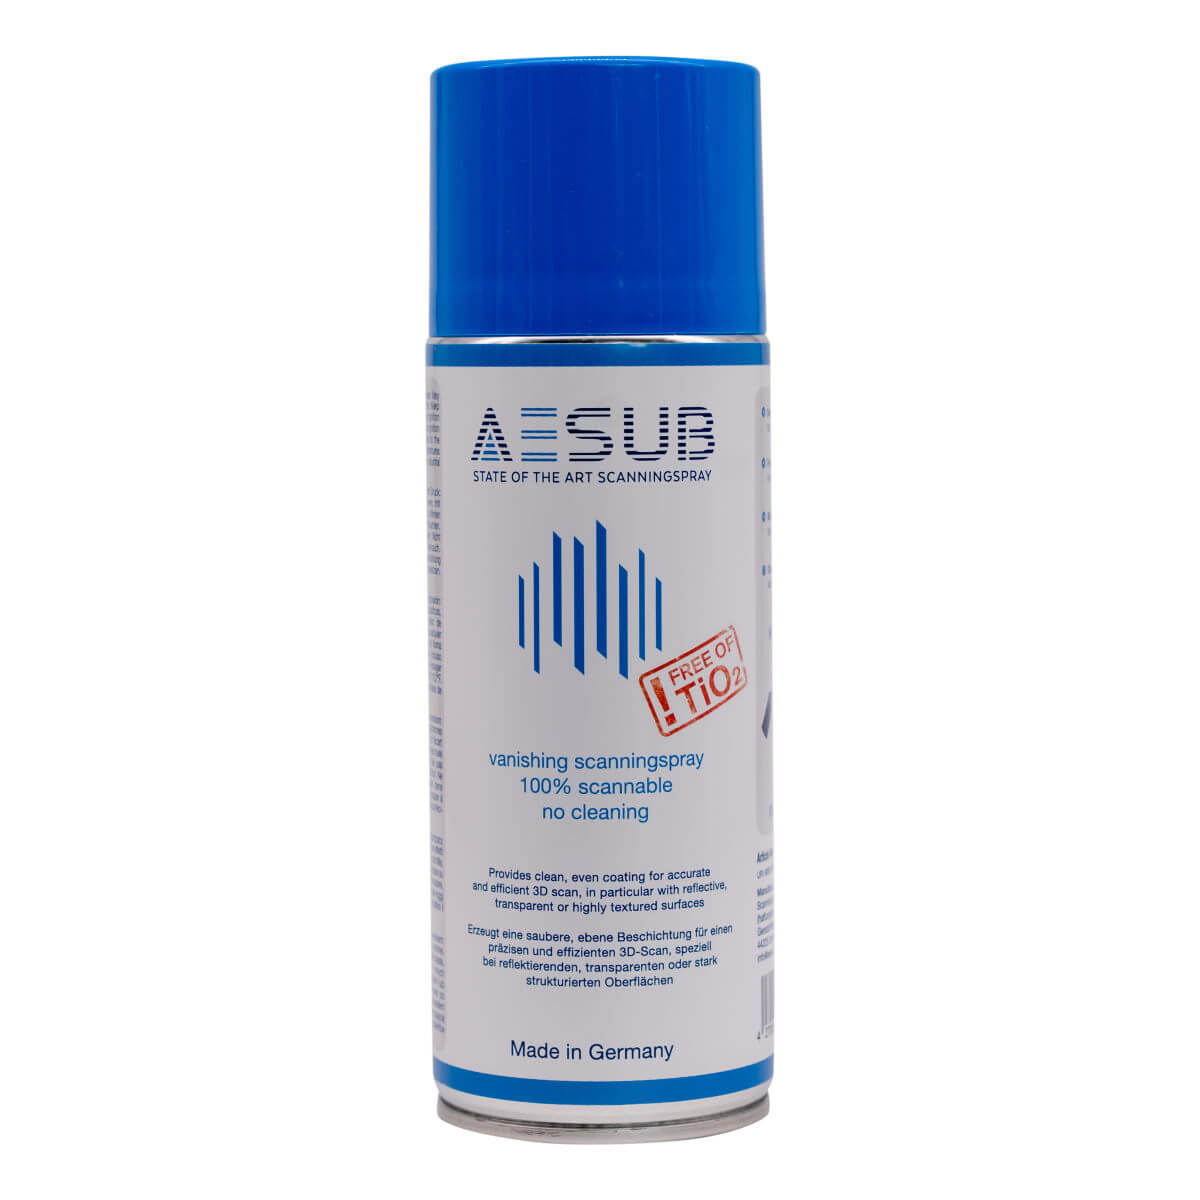 AESUB Blue 3D Scanning Spray | 3D Scanning Accessories